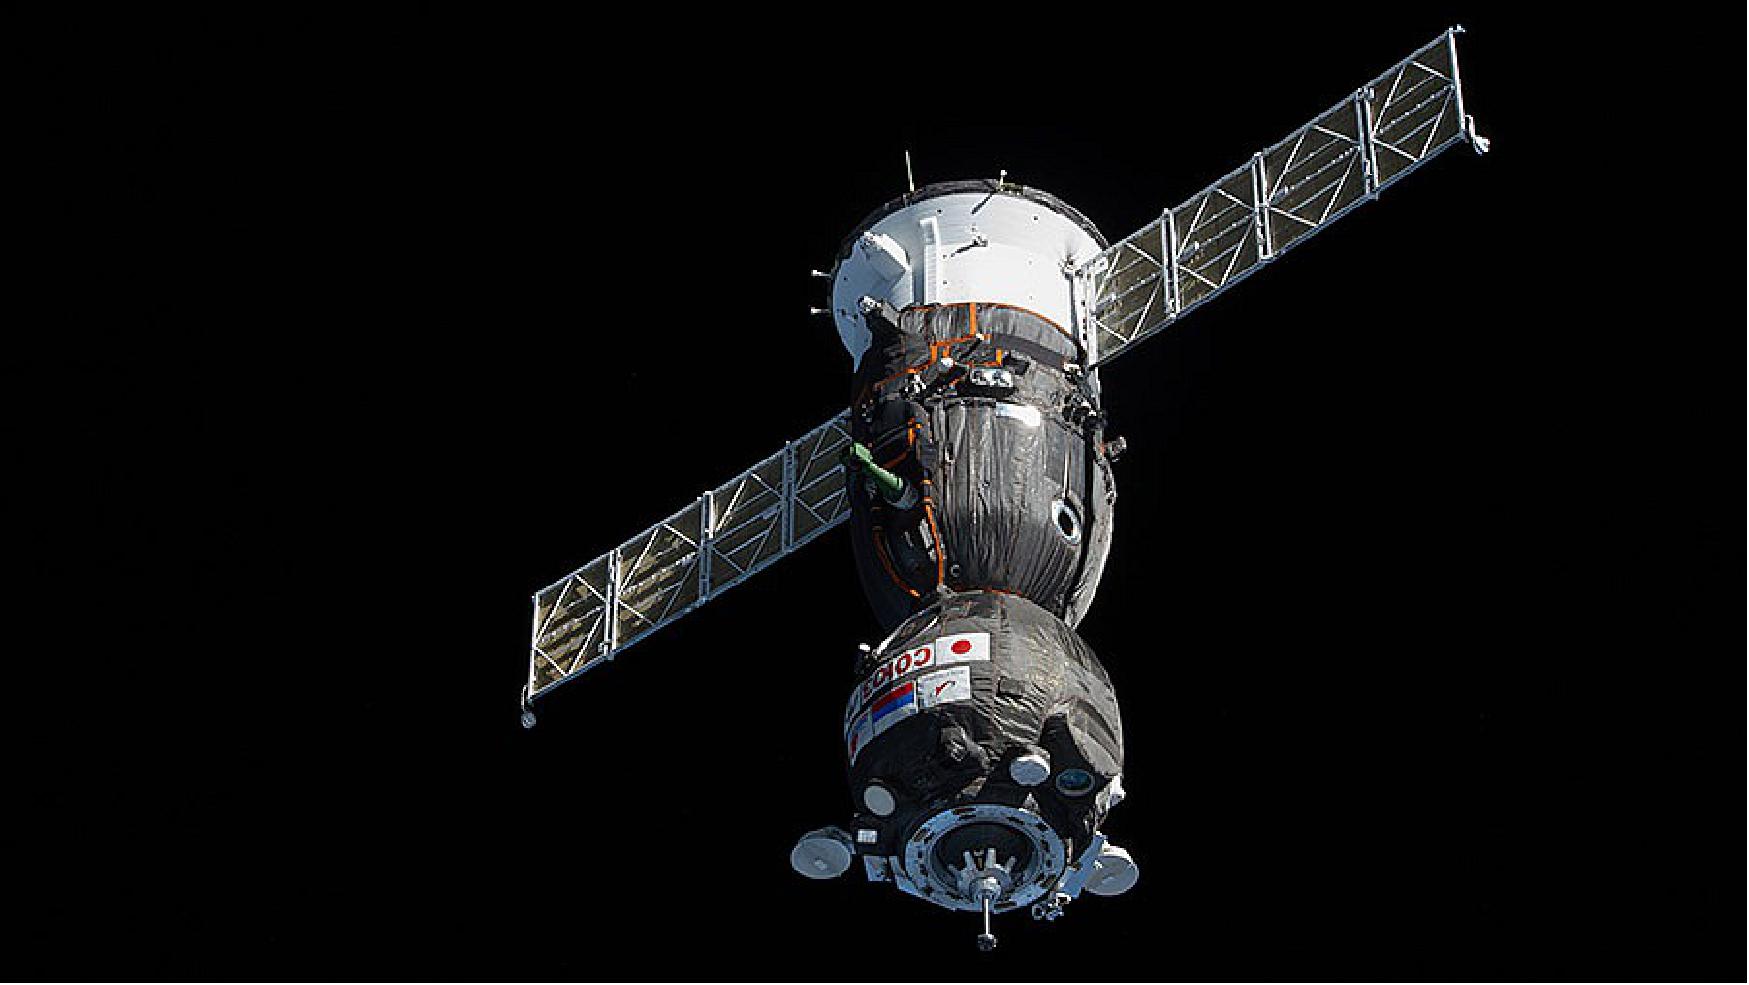 Figure 16: The Soyuz MS-20 crew ship, carrying cosmonaut Alexander Misurkin and spaceflight participants Yusaku Maezawa and Yozo Hirano, approaches the space station (image credit: NASA TV)